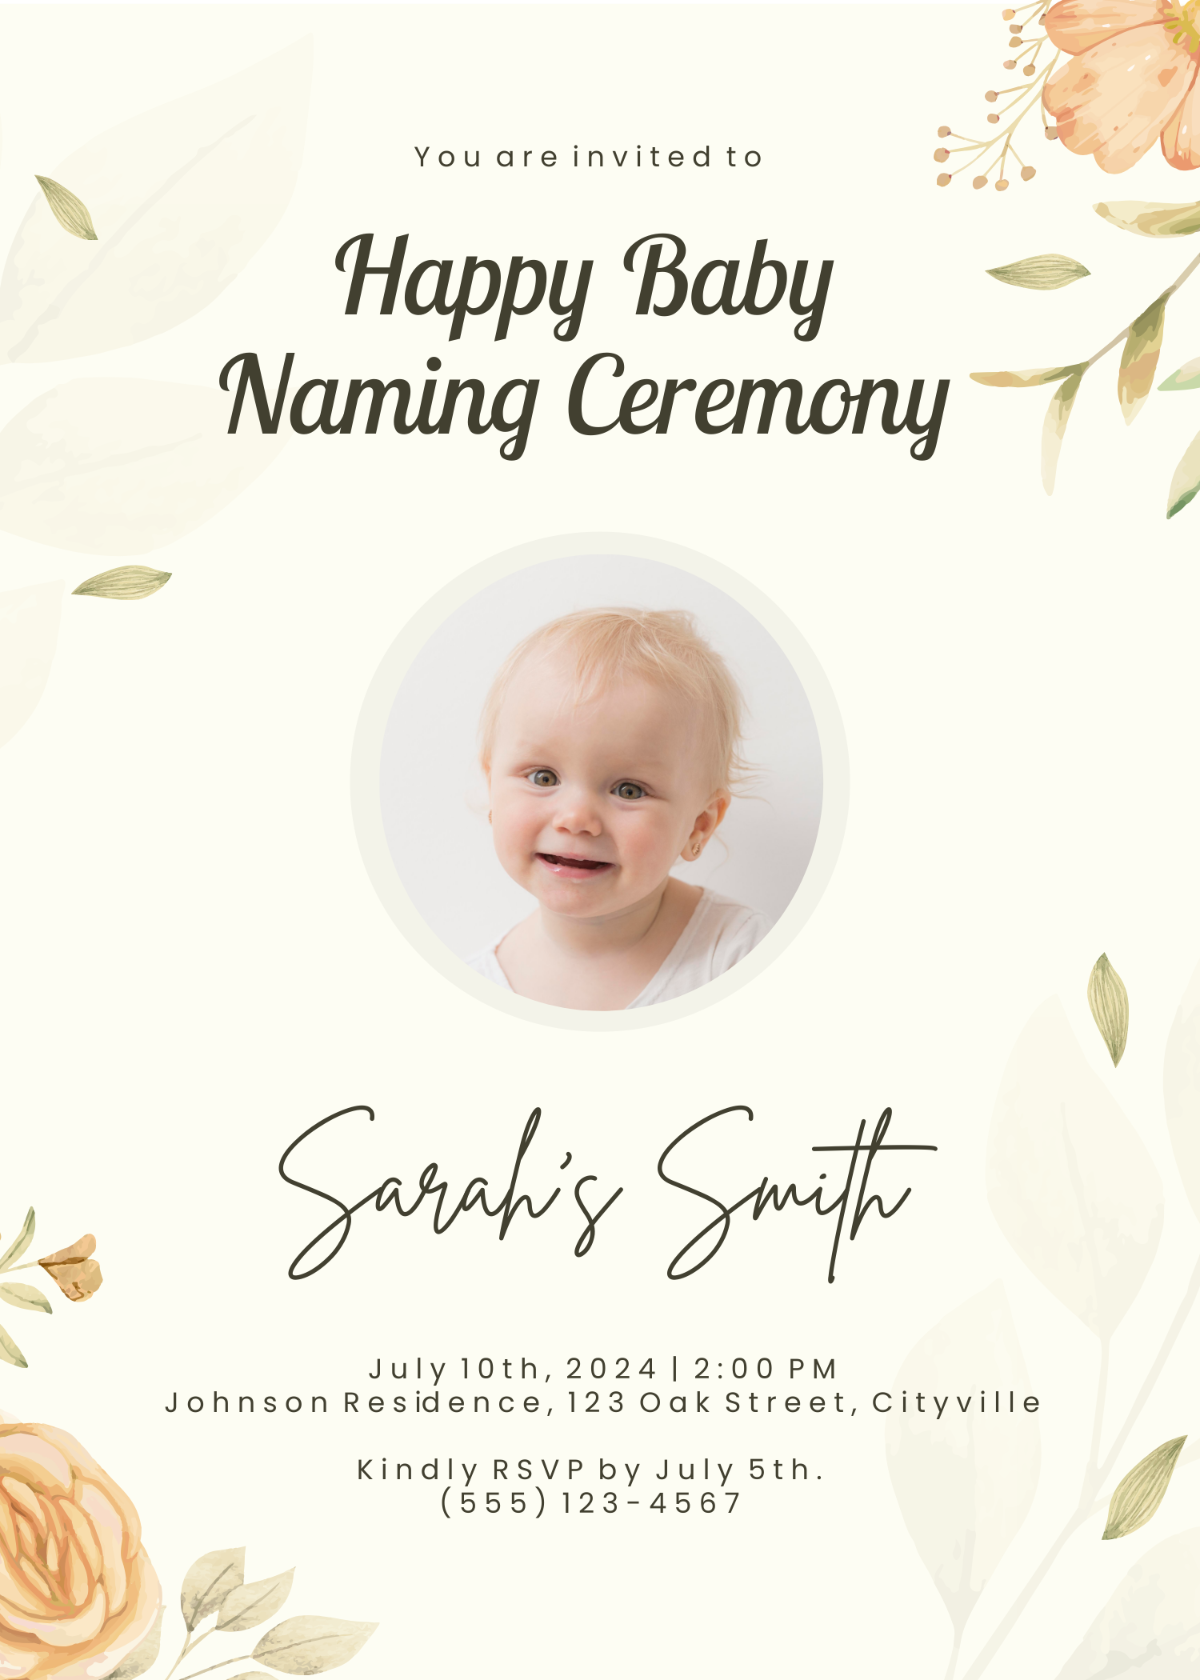 Happy Baby Naming Ceremony Invitation